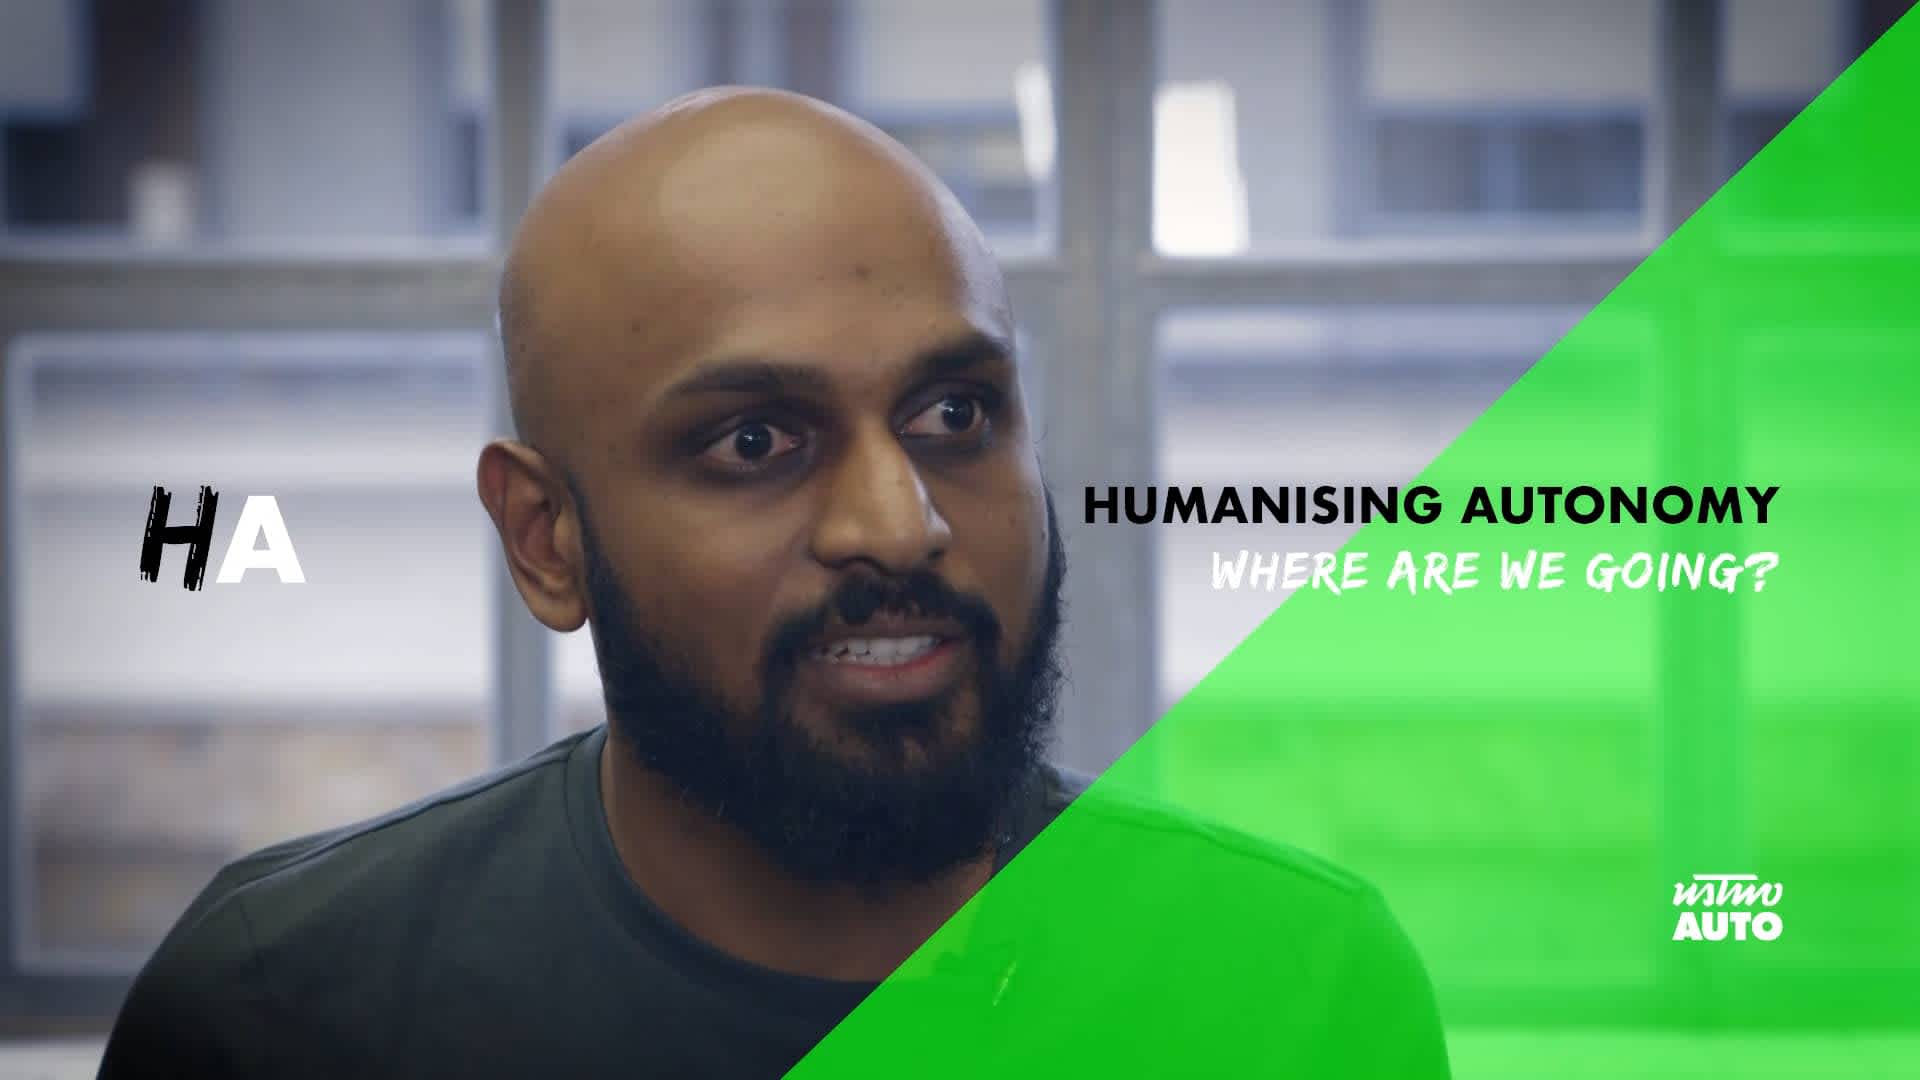 Humanising Autonomy video poster